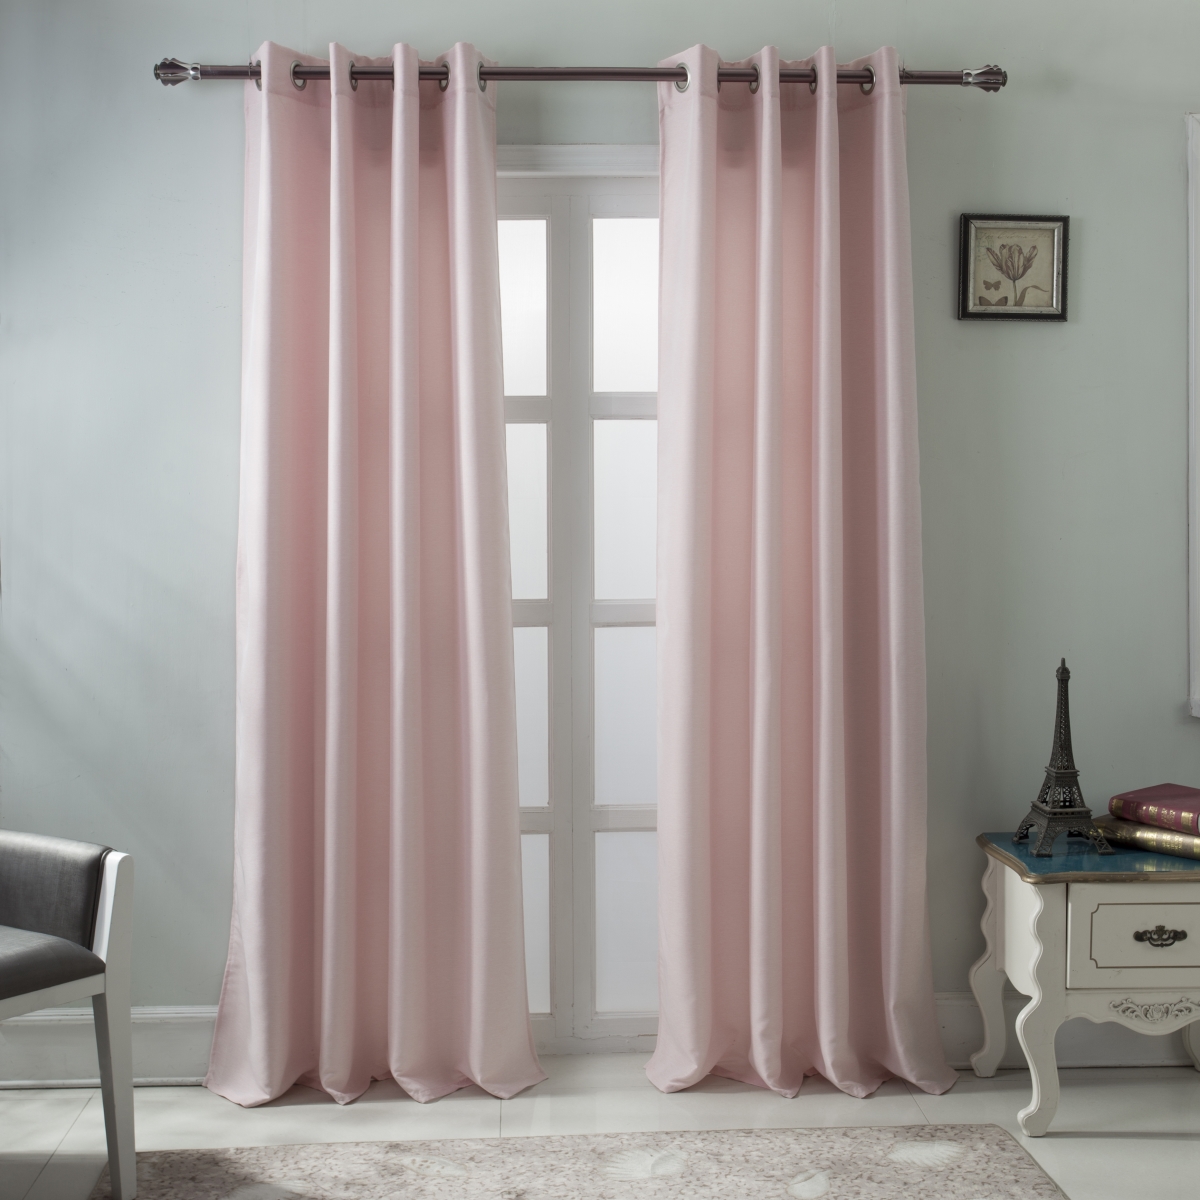 Pnb17279 54 X 84 In. Burma Room Darkening Grommet Single Curtain Panel, Rose